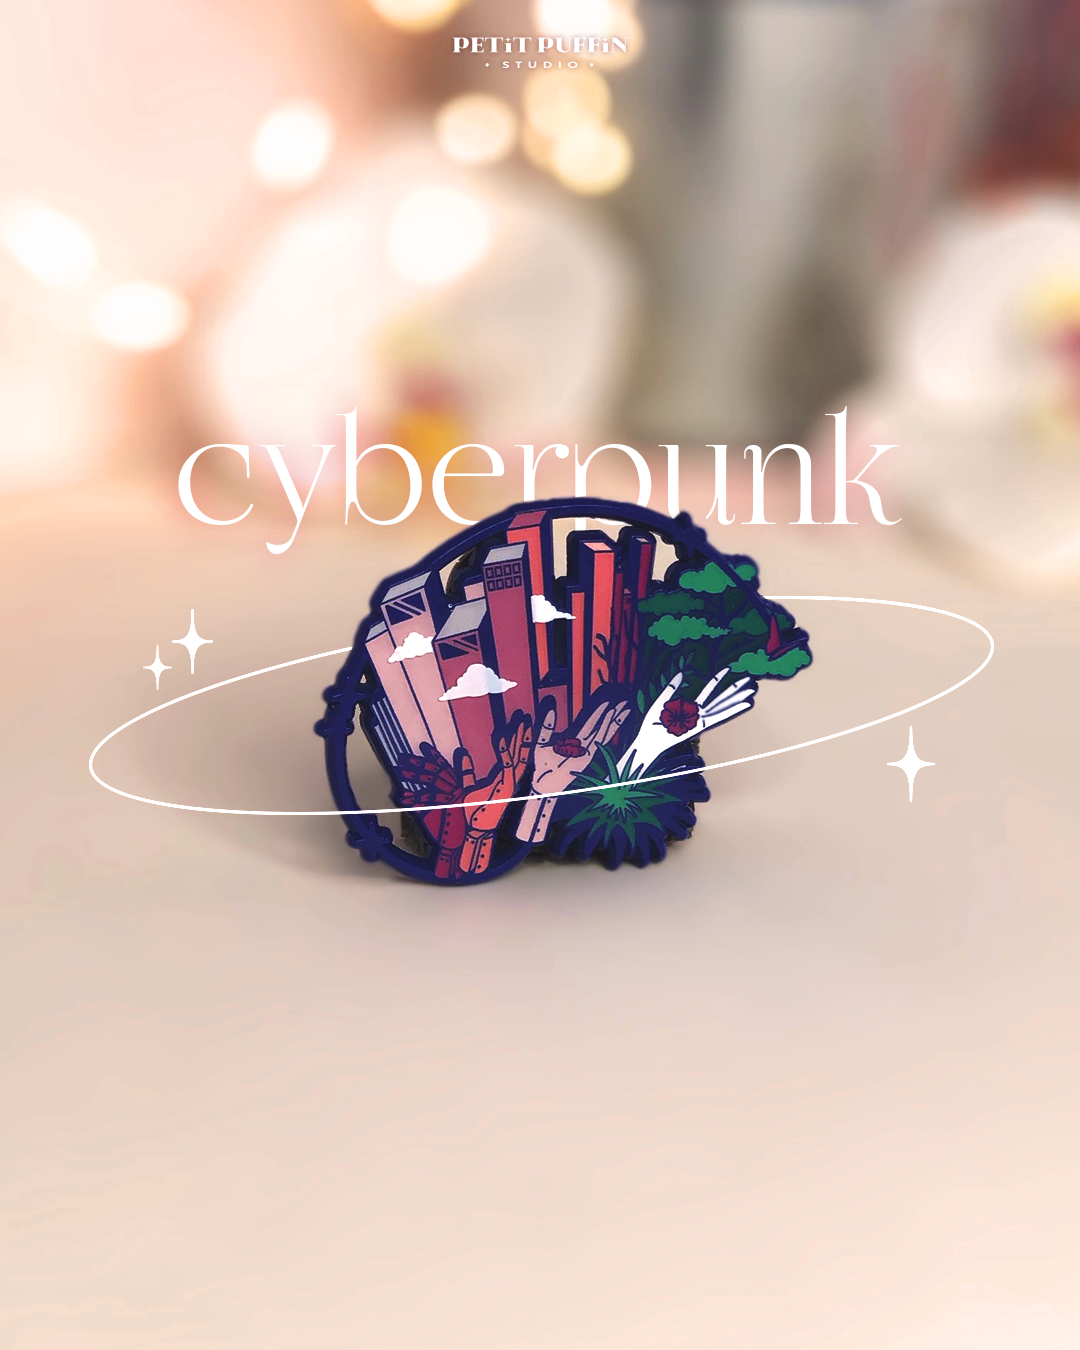 Cyberpunk - September 22 Pin Club!